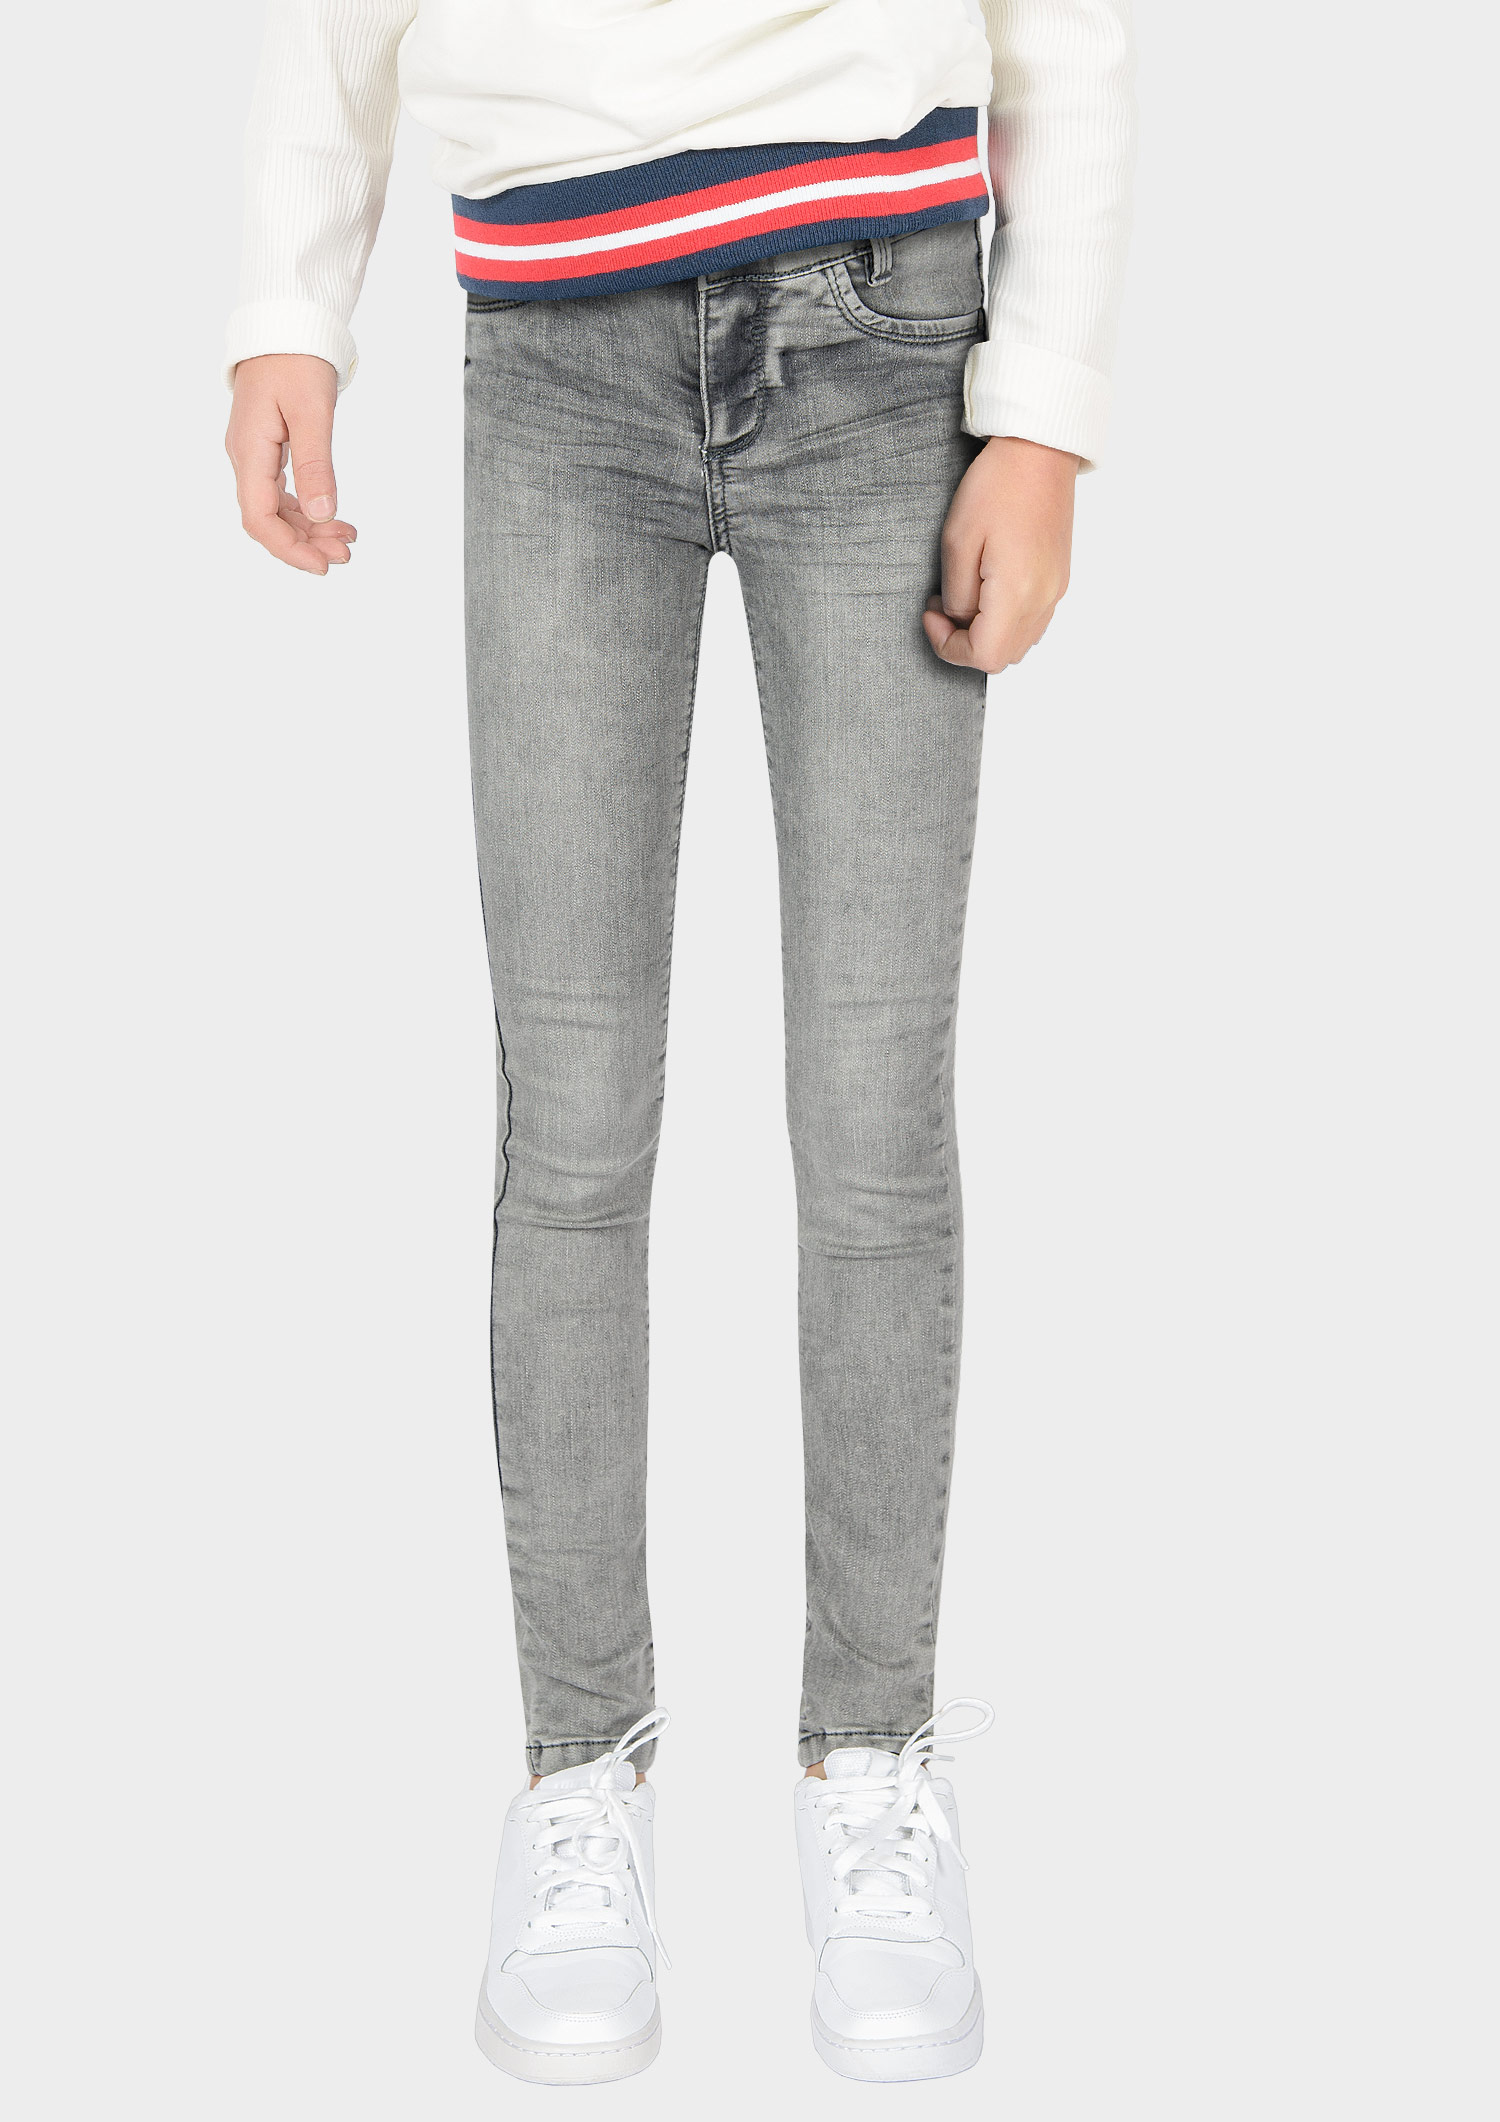 0126-NOS Girls Jeans Special Skinny, Ultrastretch, verfügbar in Slim,Normal,Wide